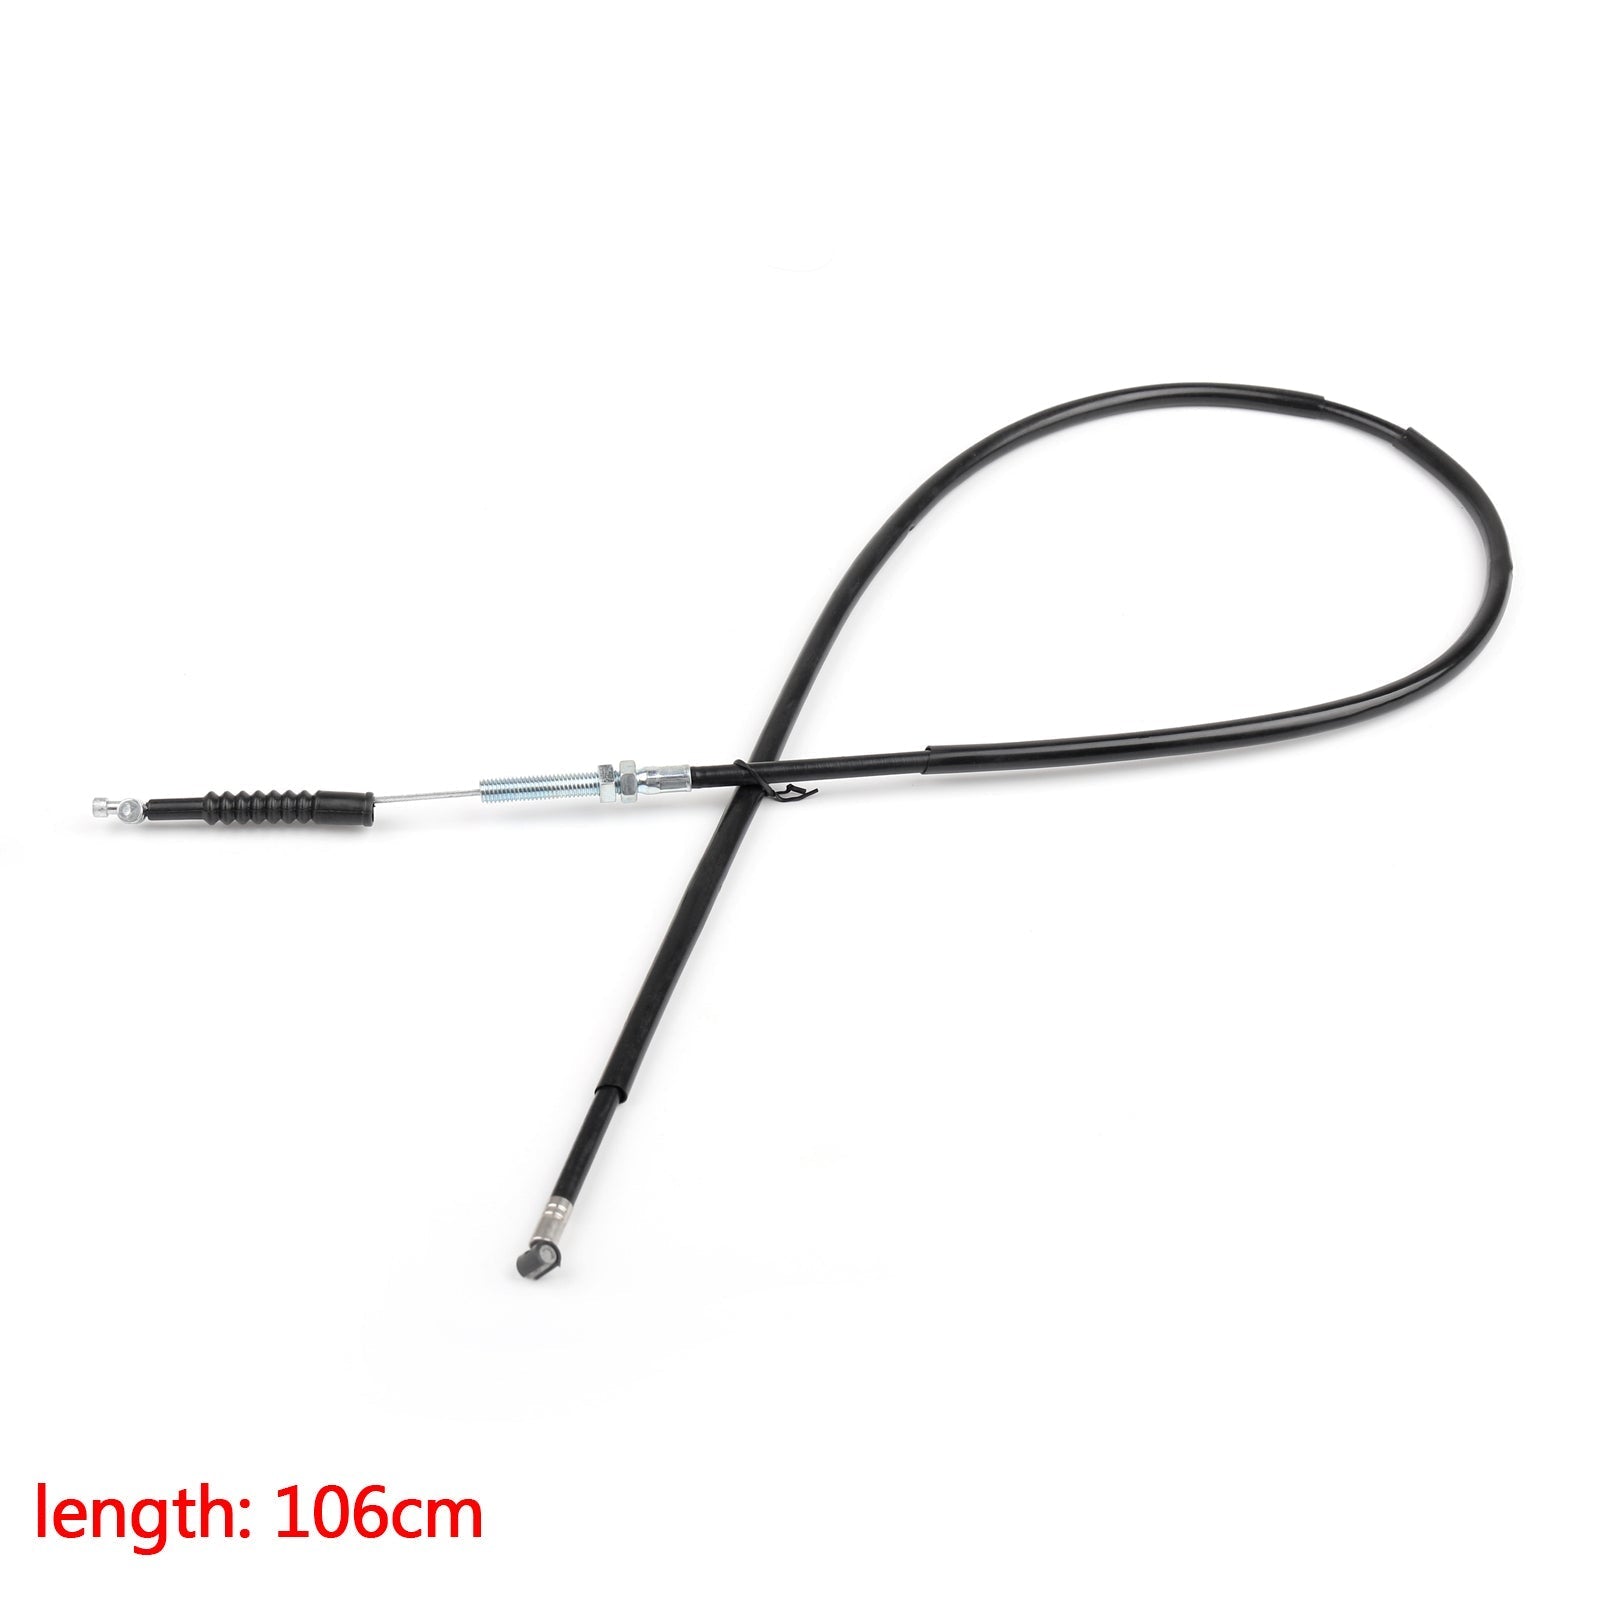 Cable de embrague de repuesto 3BN-26335-00 para Yamaha DT125 DT125R 1991-2006 genérico